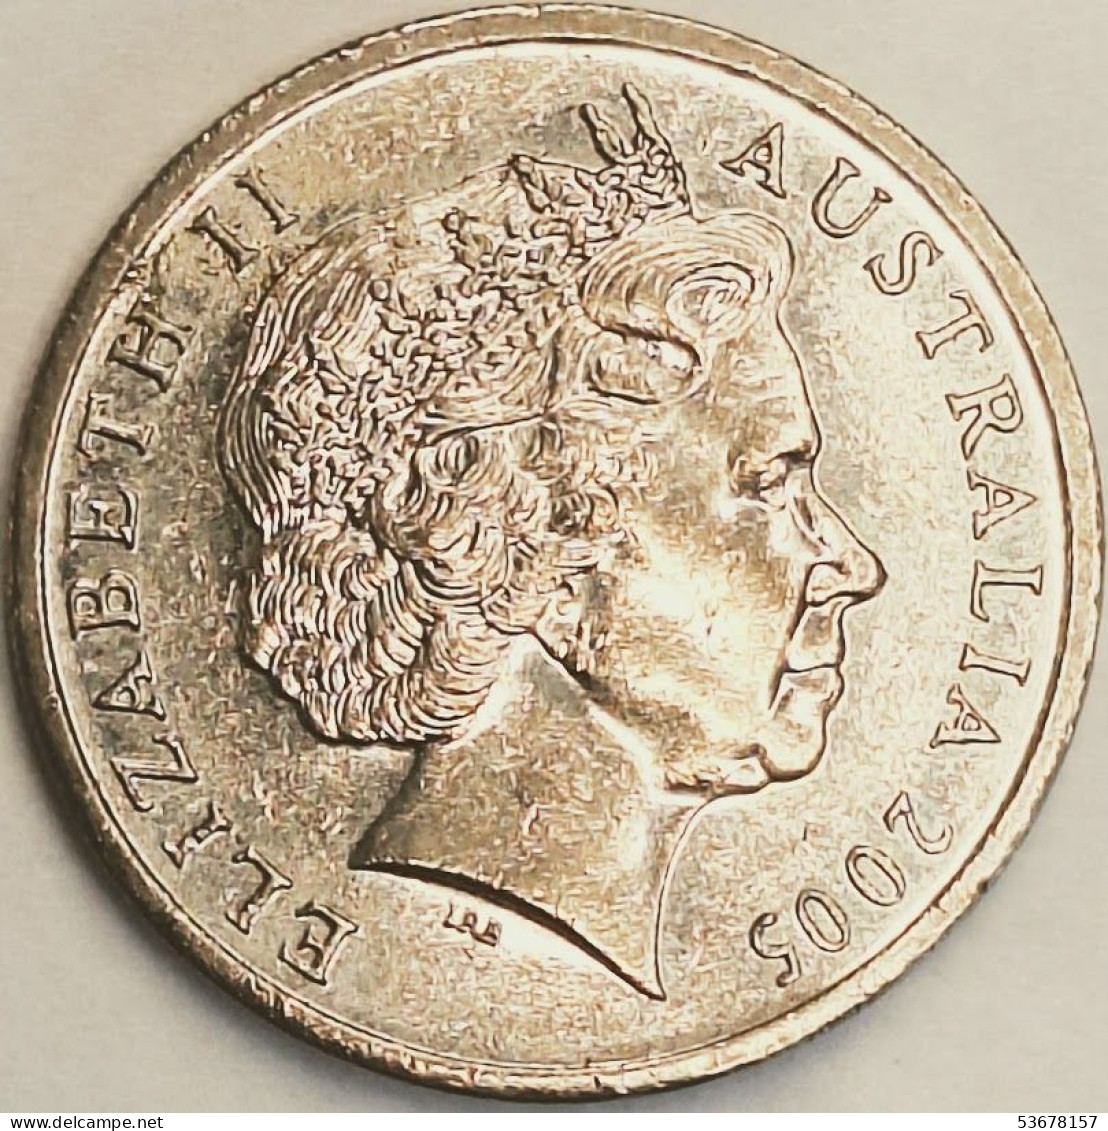 Australia - 10 Cents 2005, KM# 402 (#2809) - 10 Cents